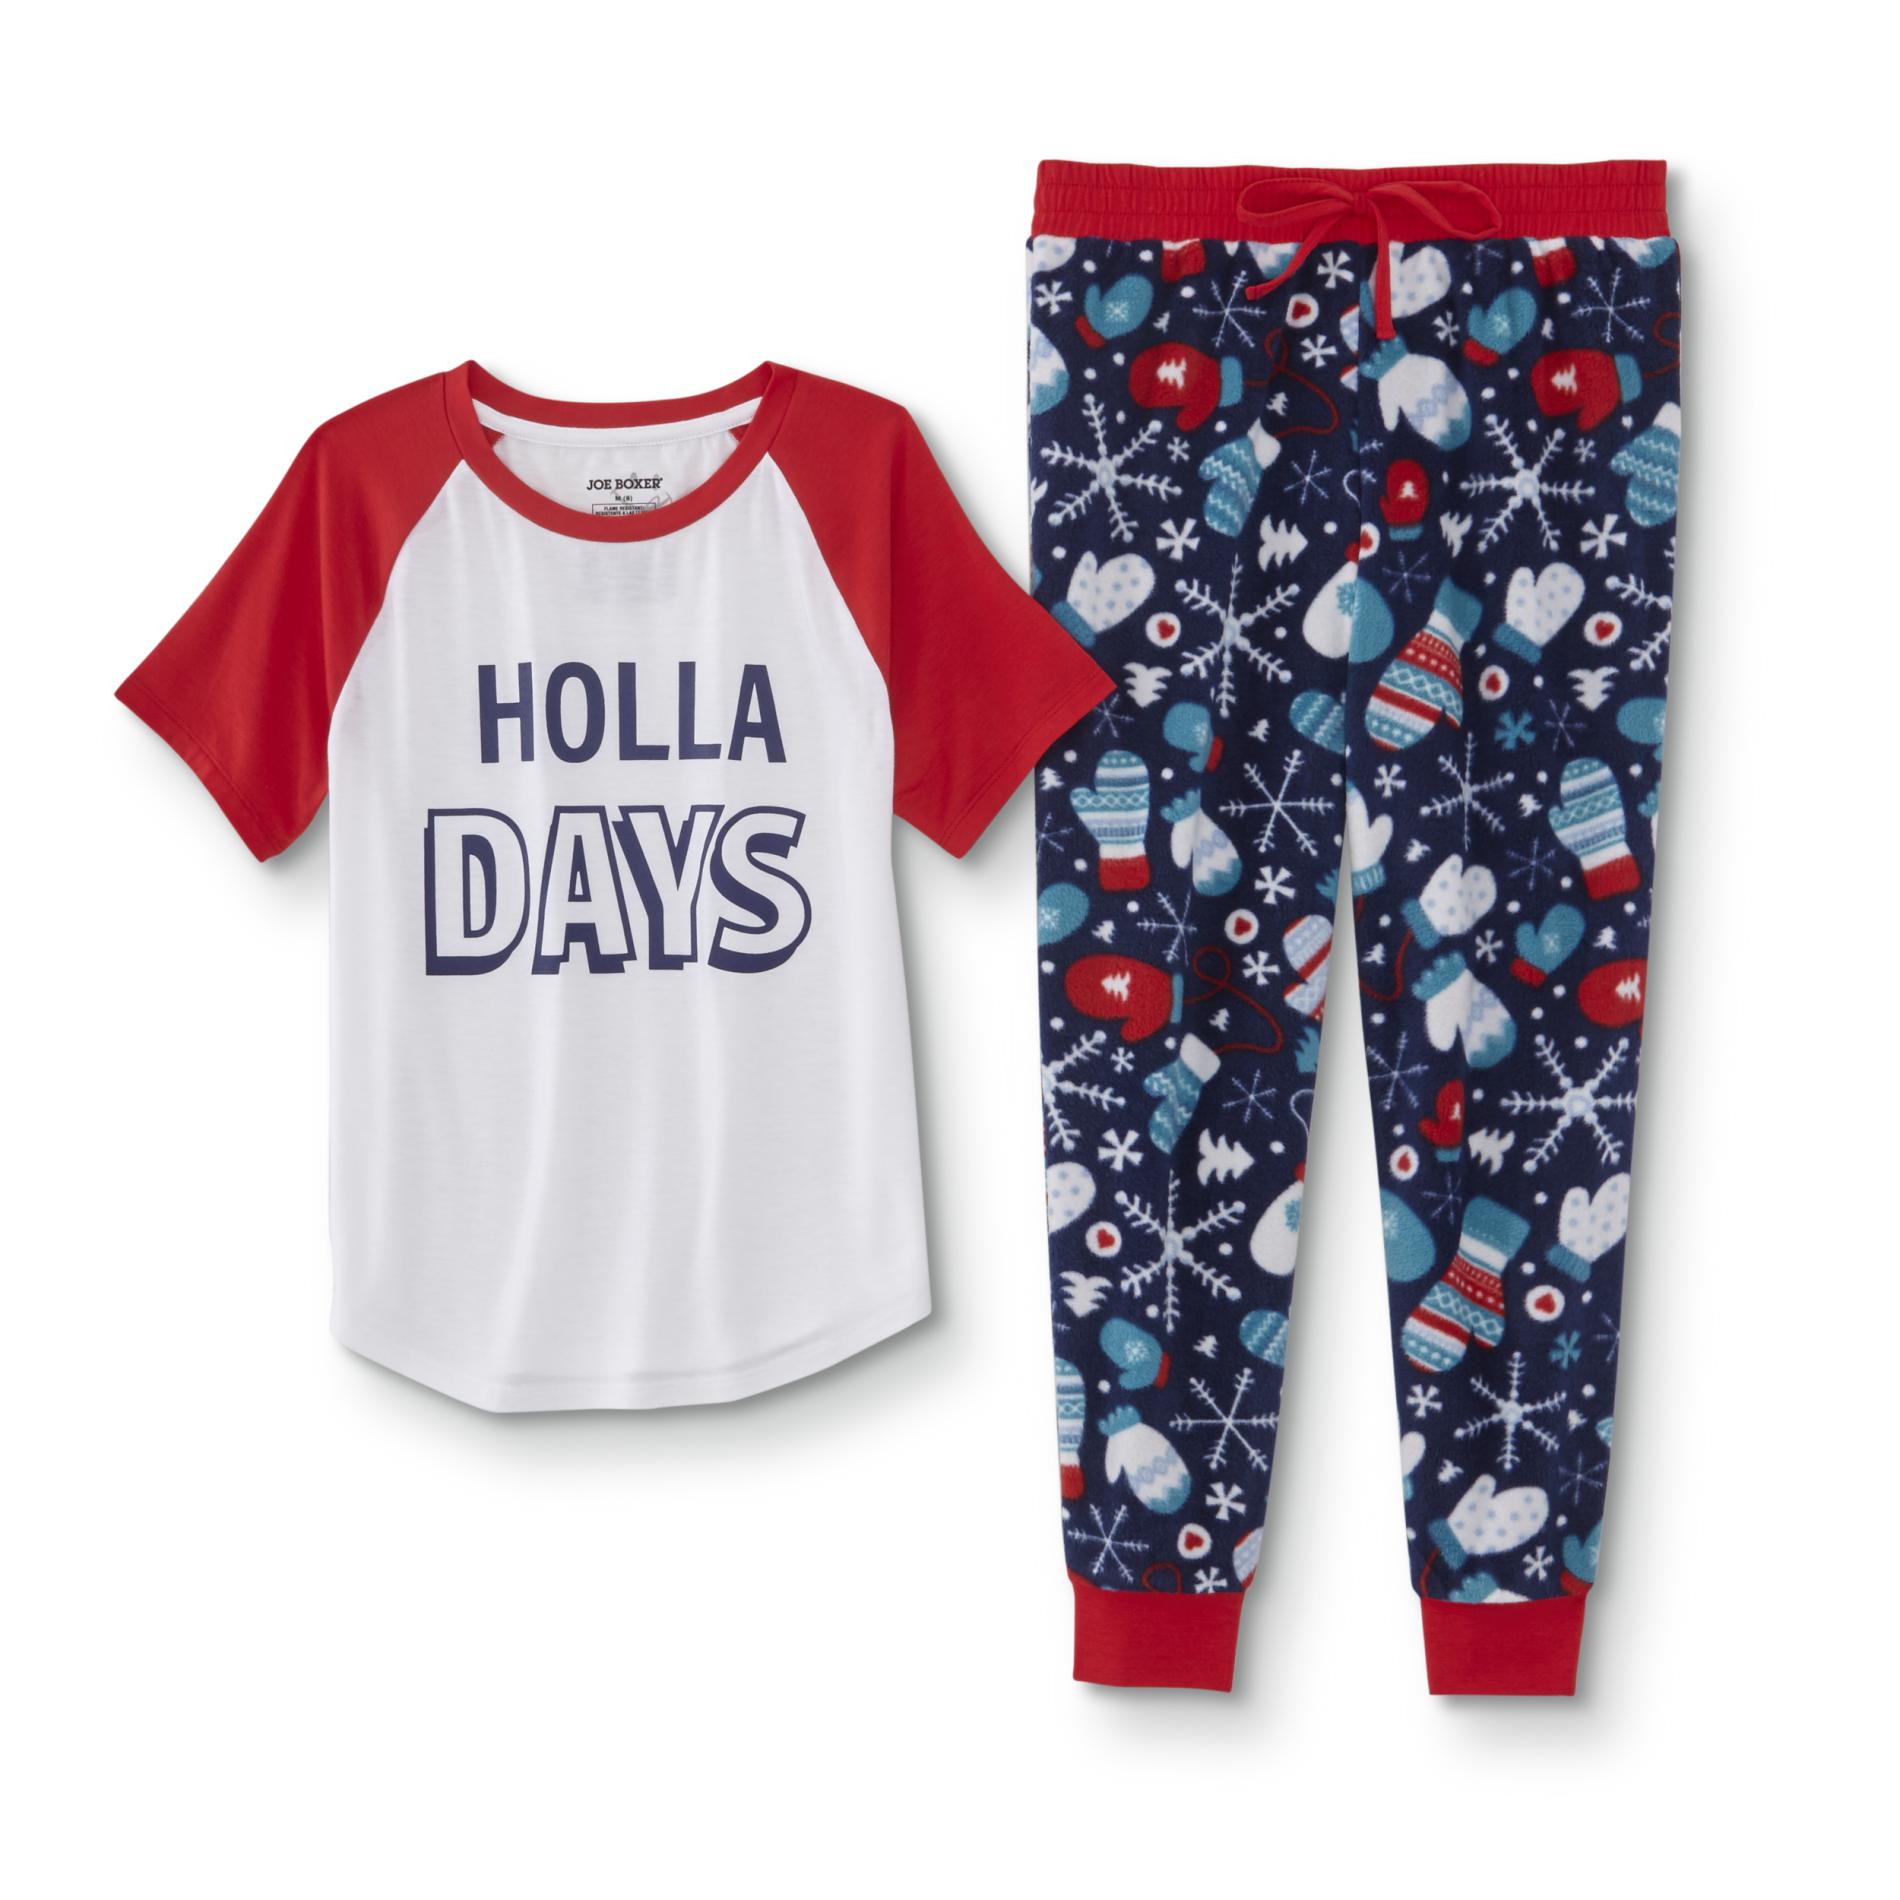 Joe Boxer Boys' Christmas Pajama Shirt & Jogger Pants - Holla Days